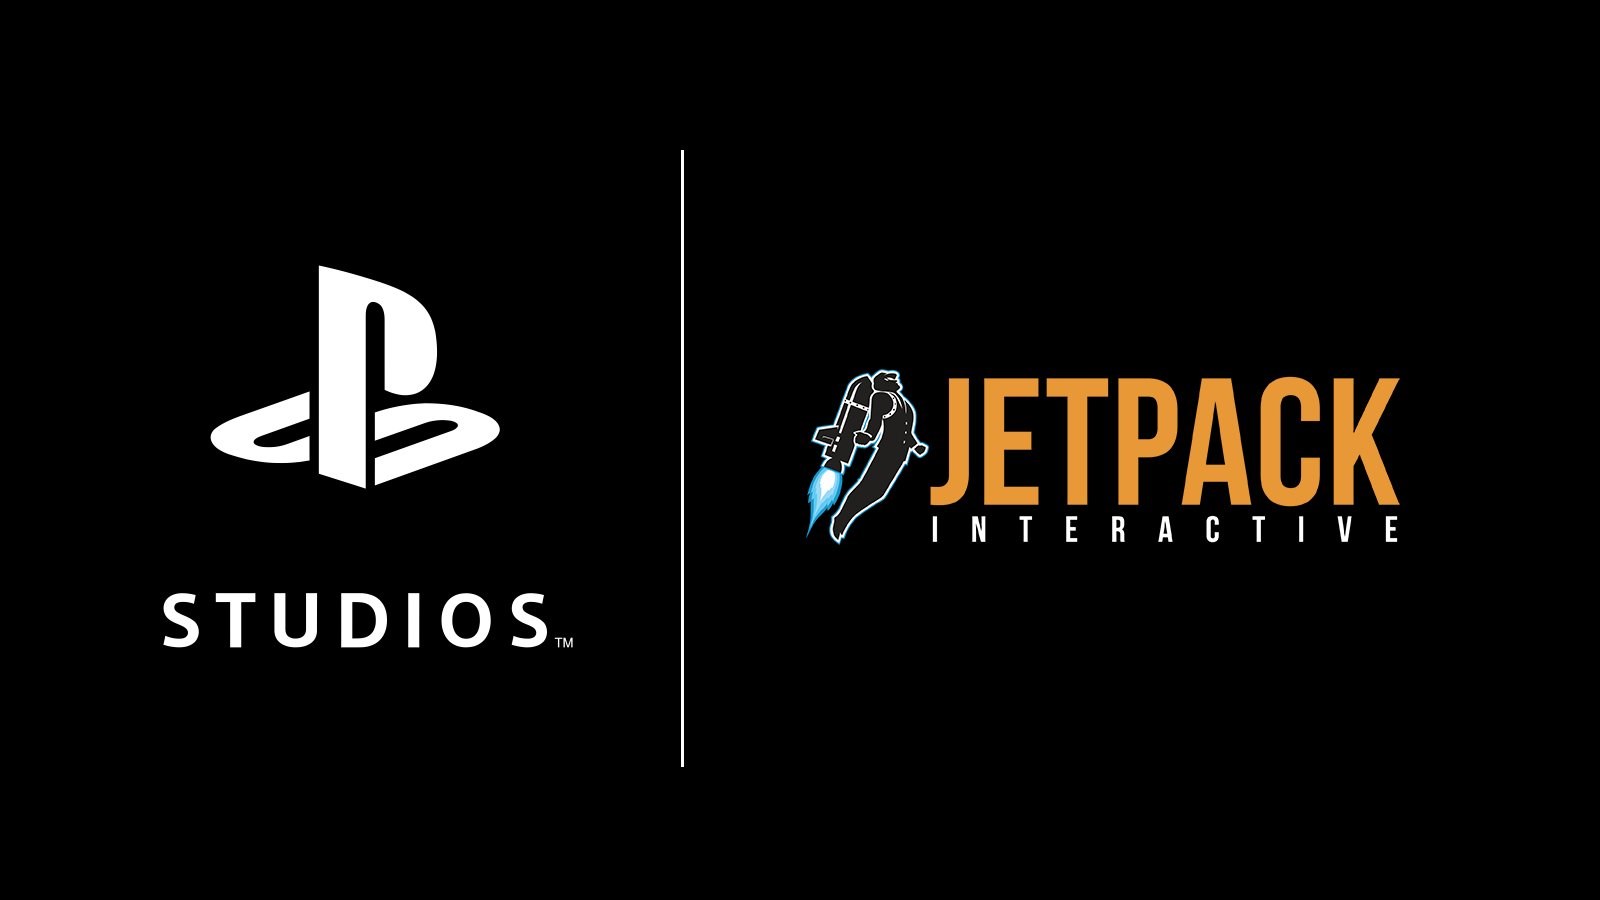 Jetpack Studios